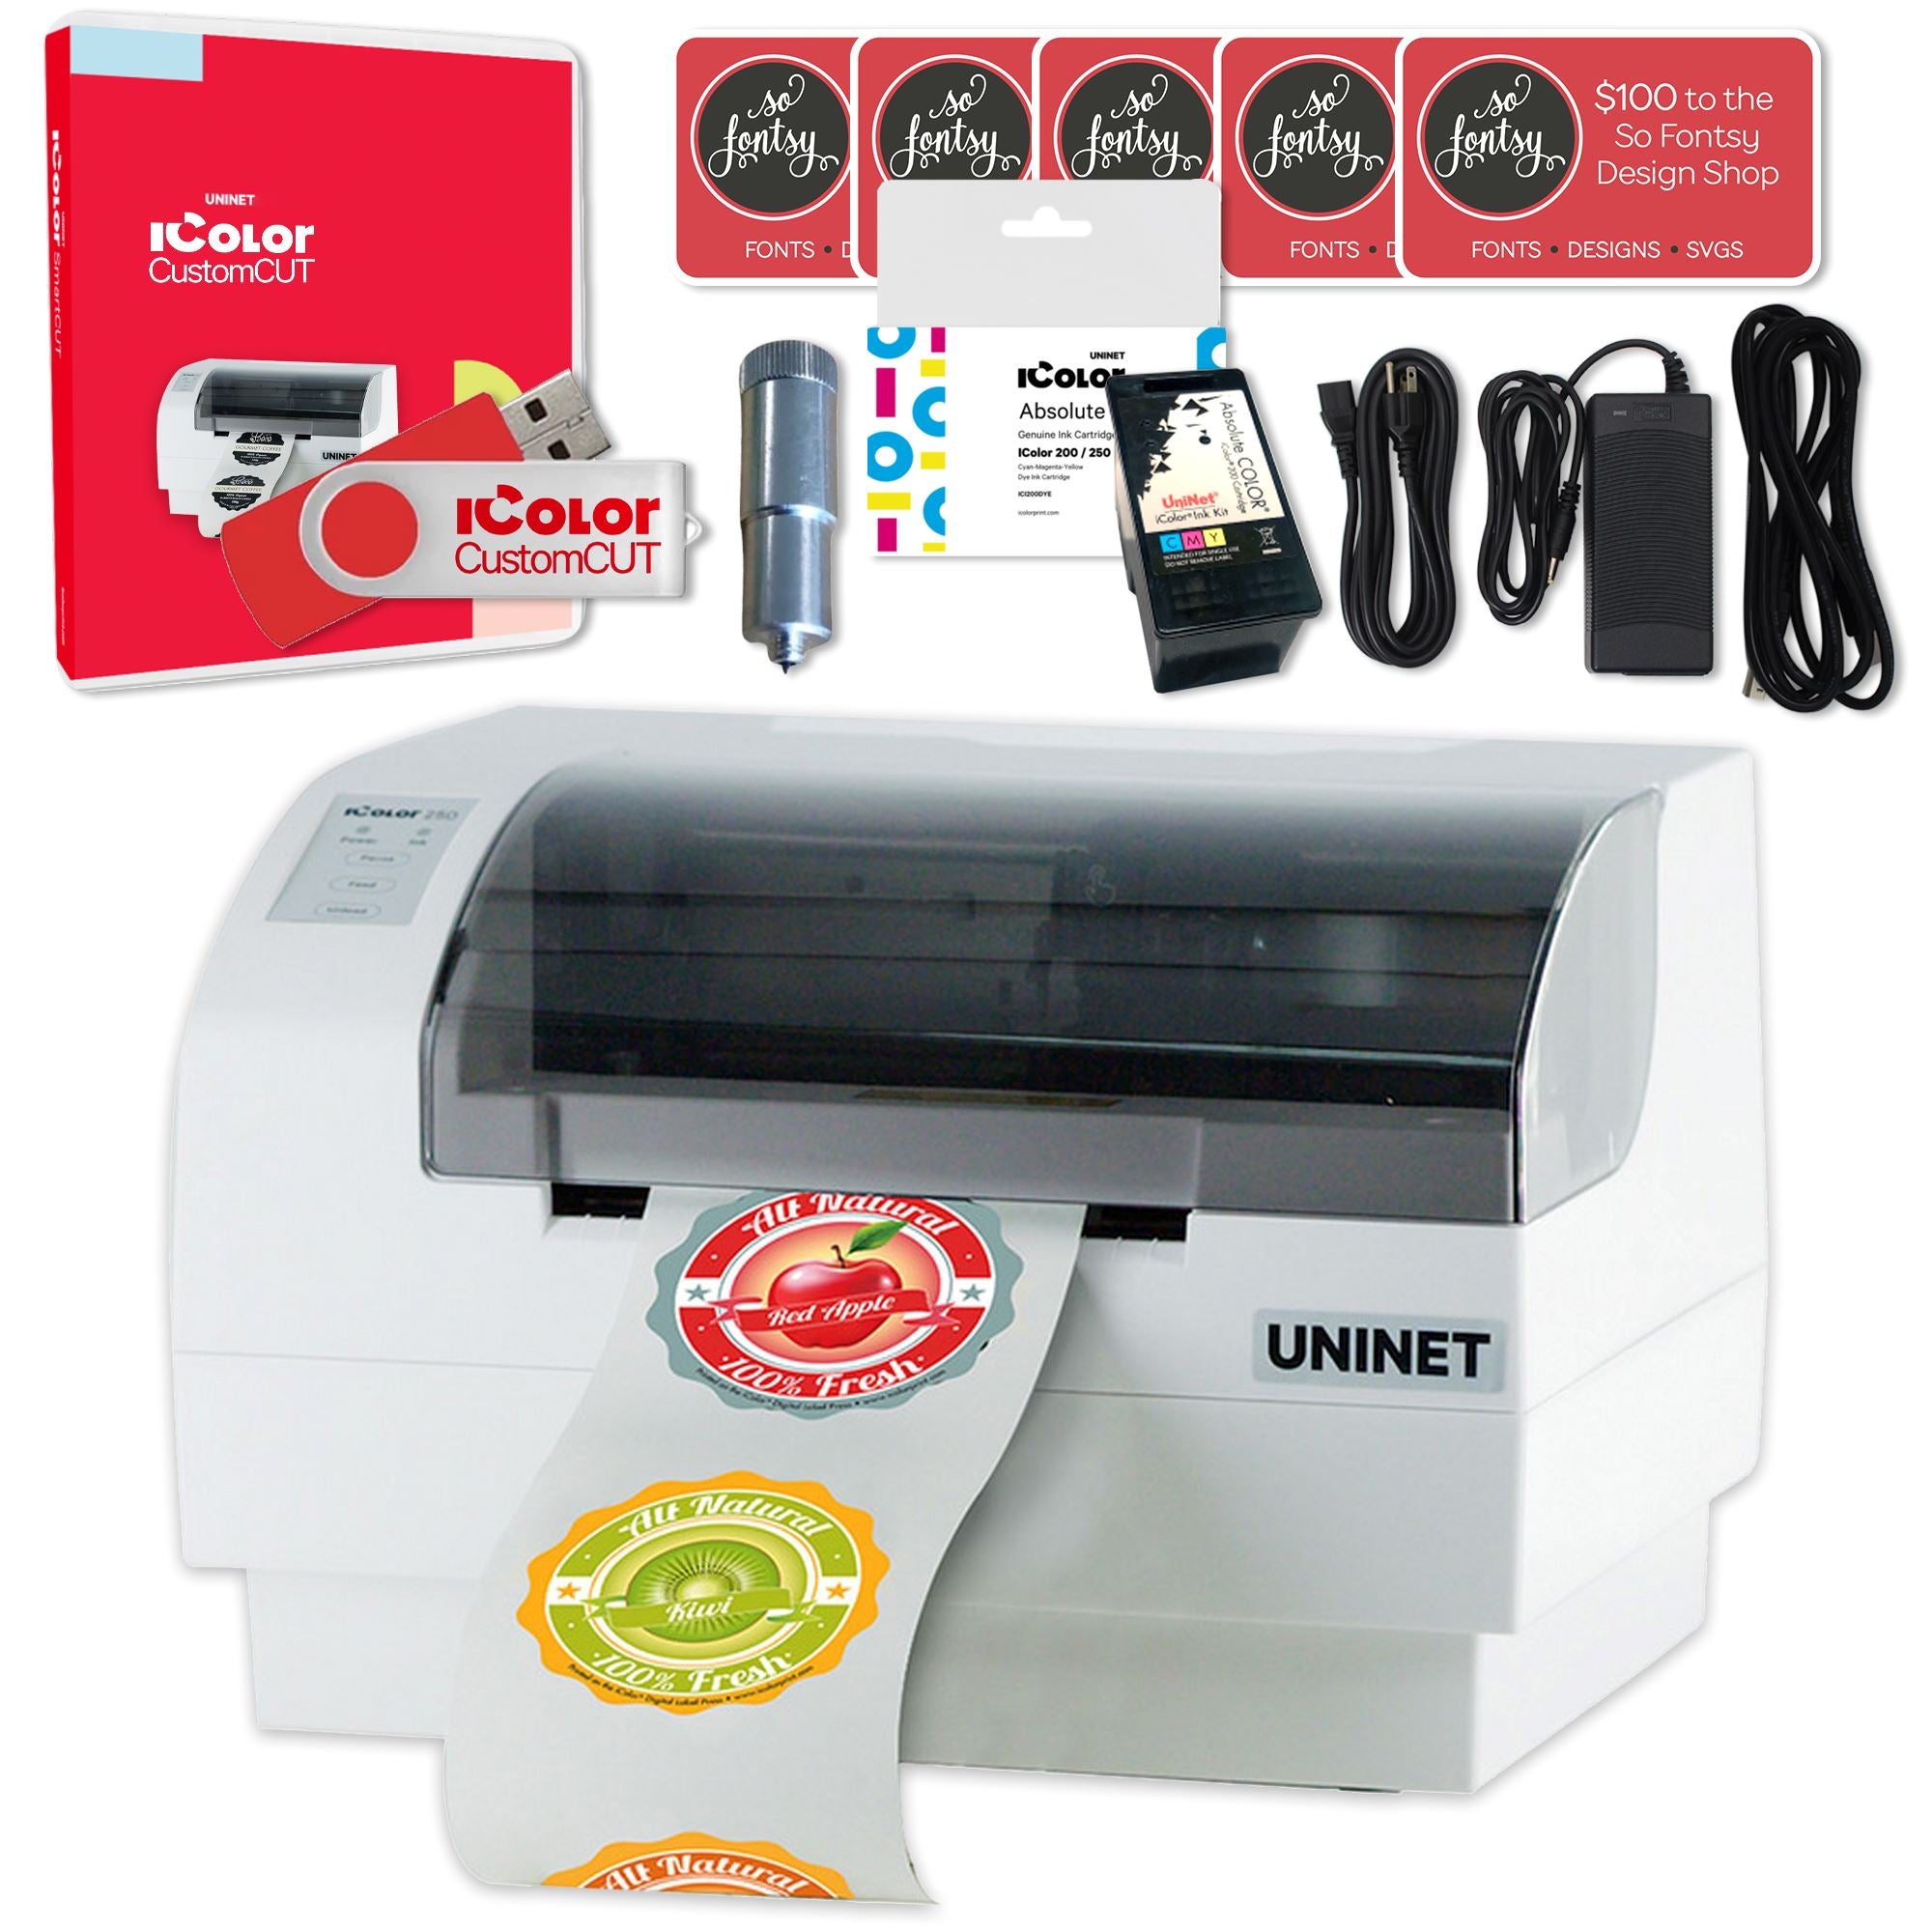 Uninet IColor 250 Print & Cut Label Maker Swing Design